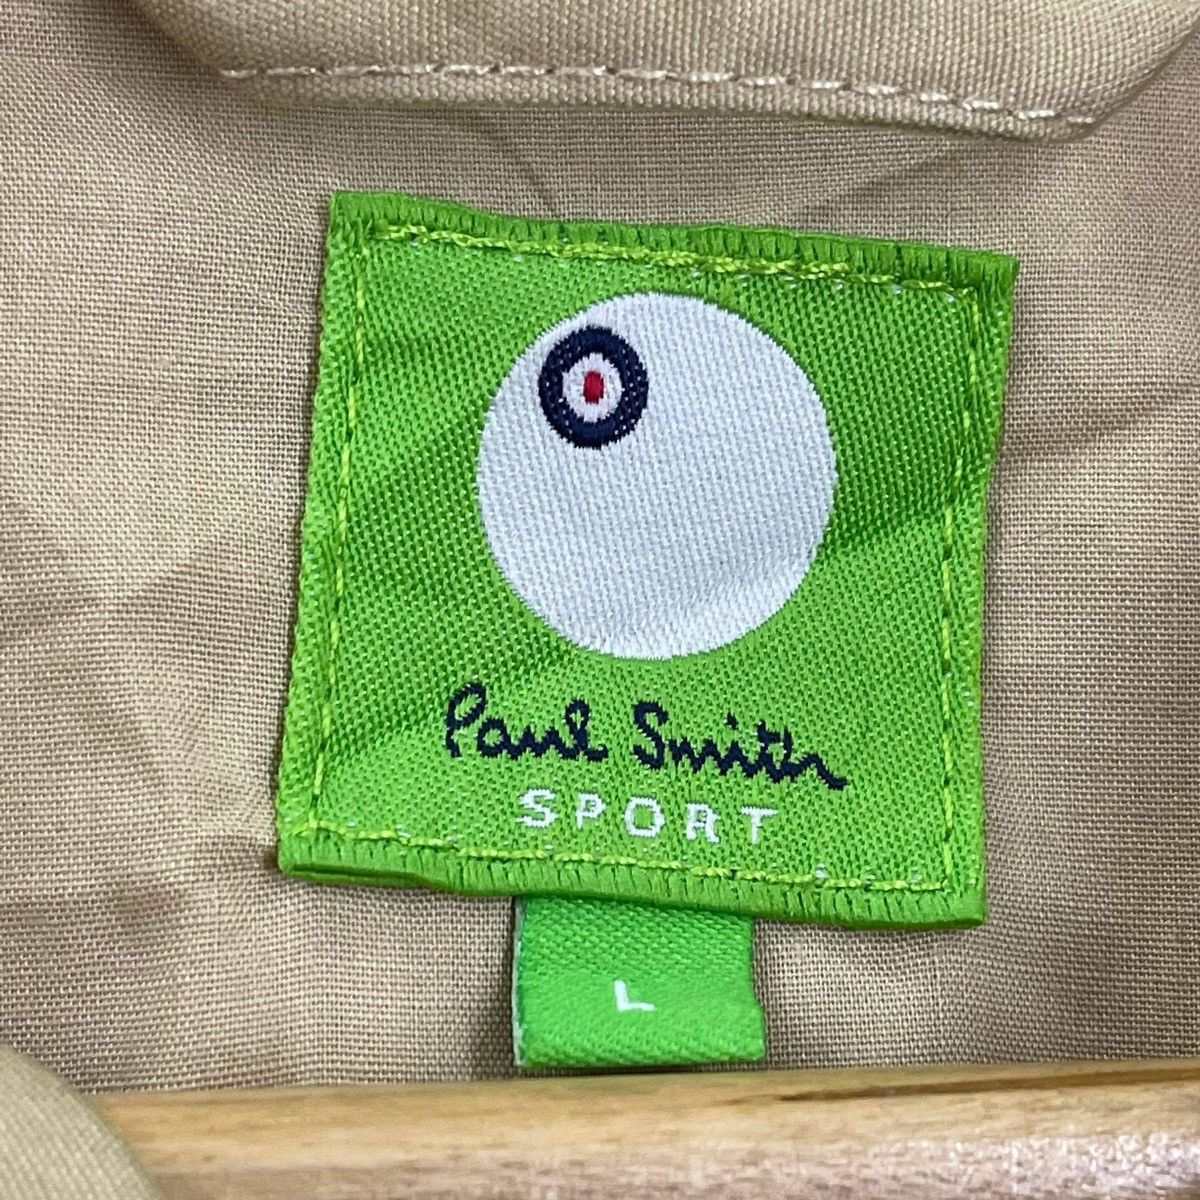 Paul Smith Button Jacket Size M - 7